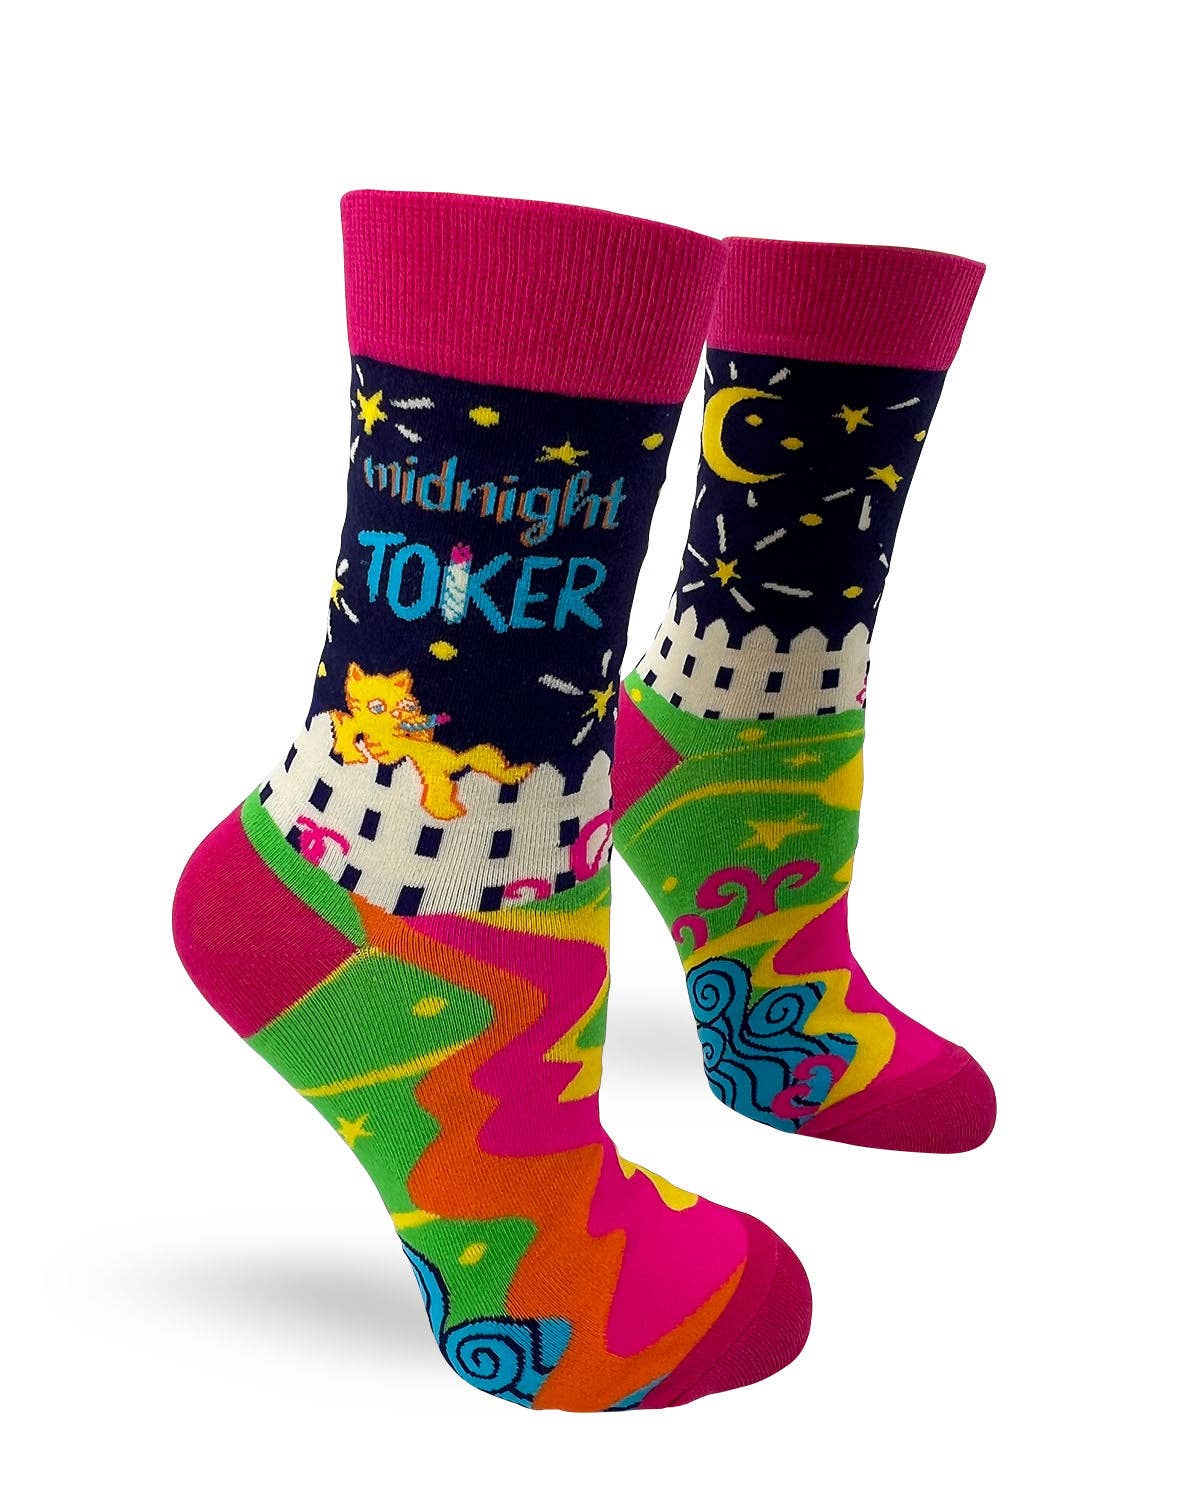 Midnight Toker Women's Crew Socks